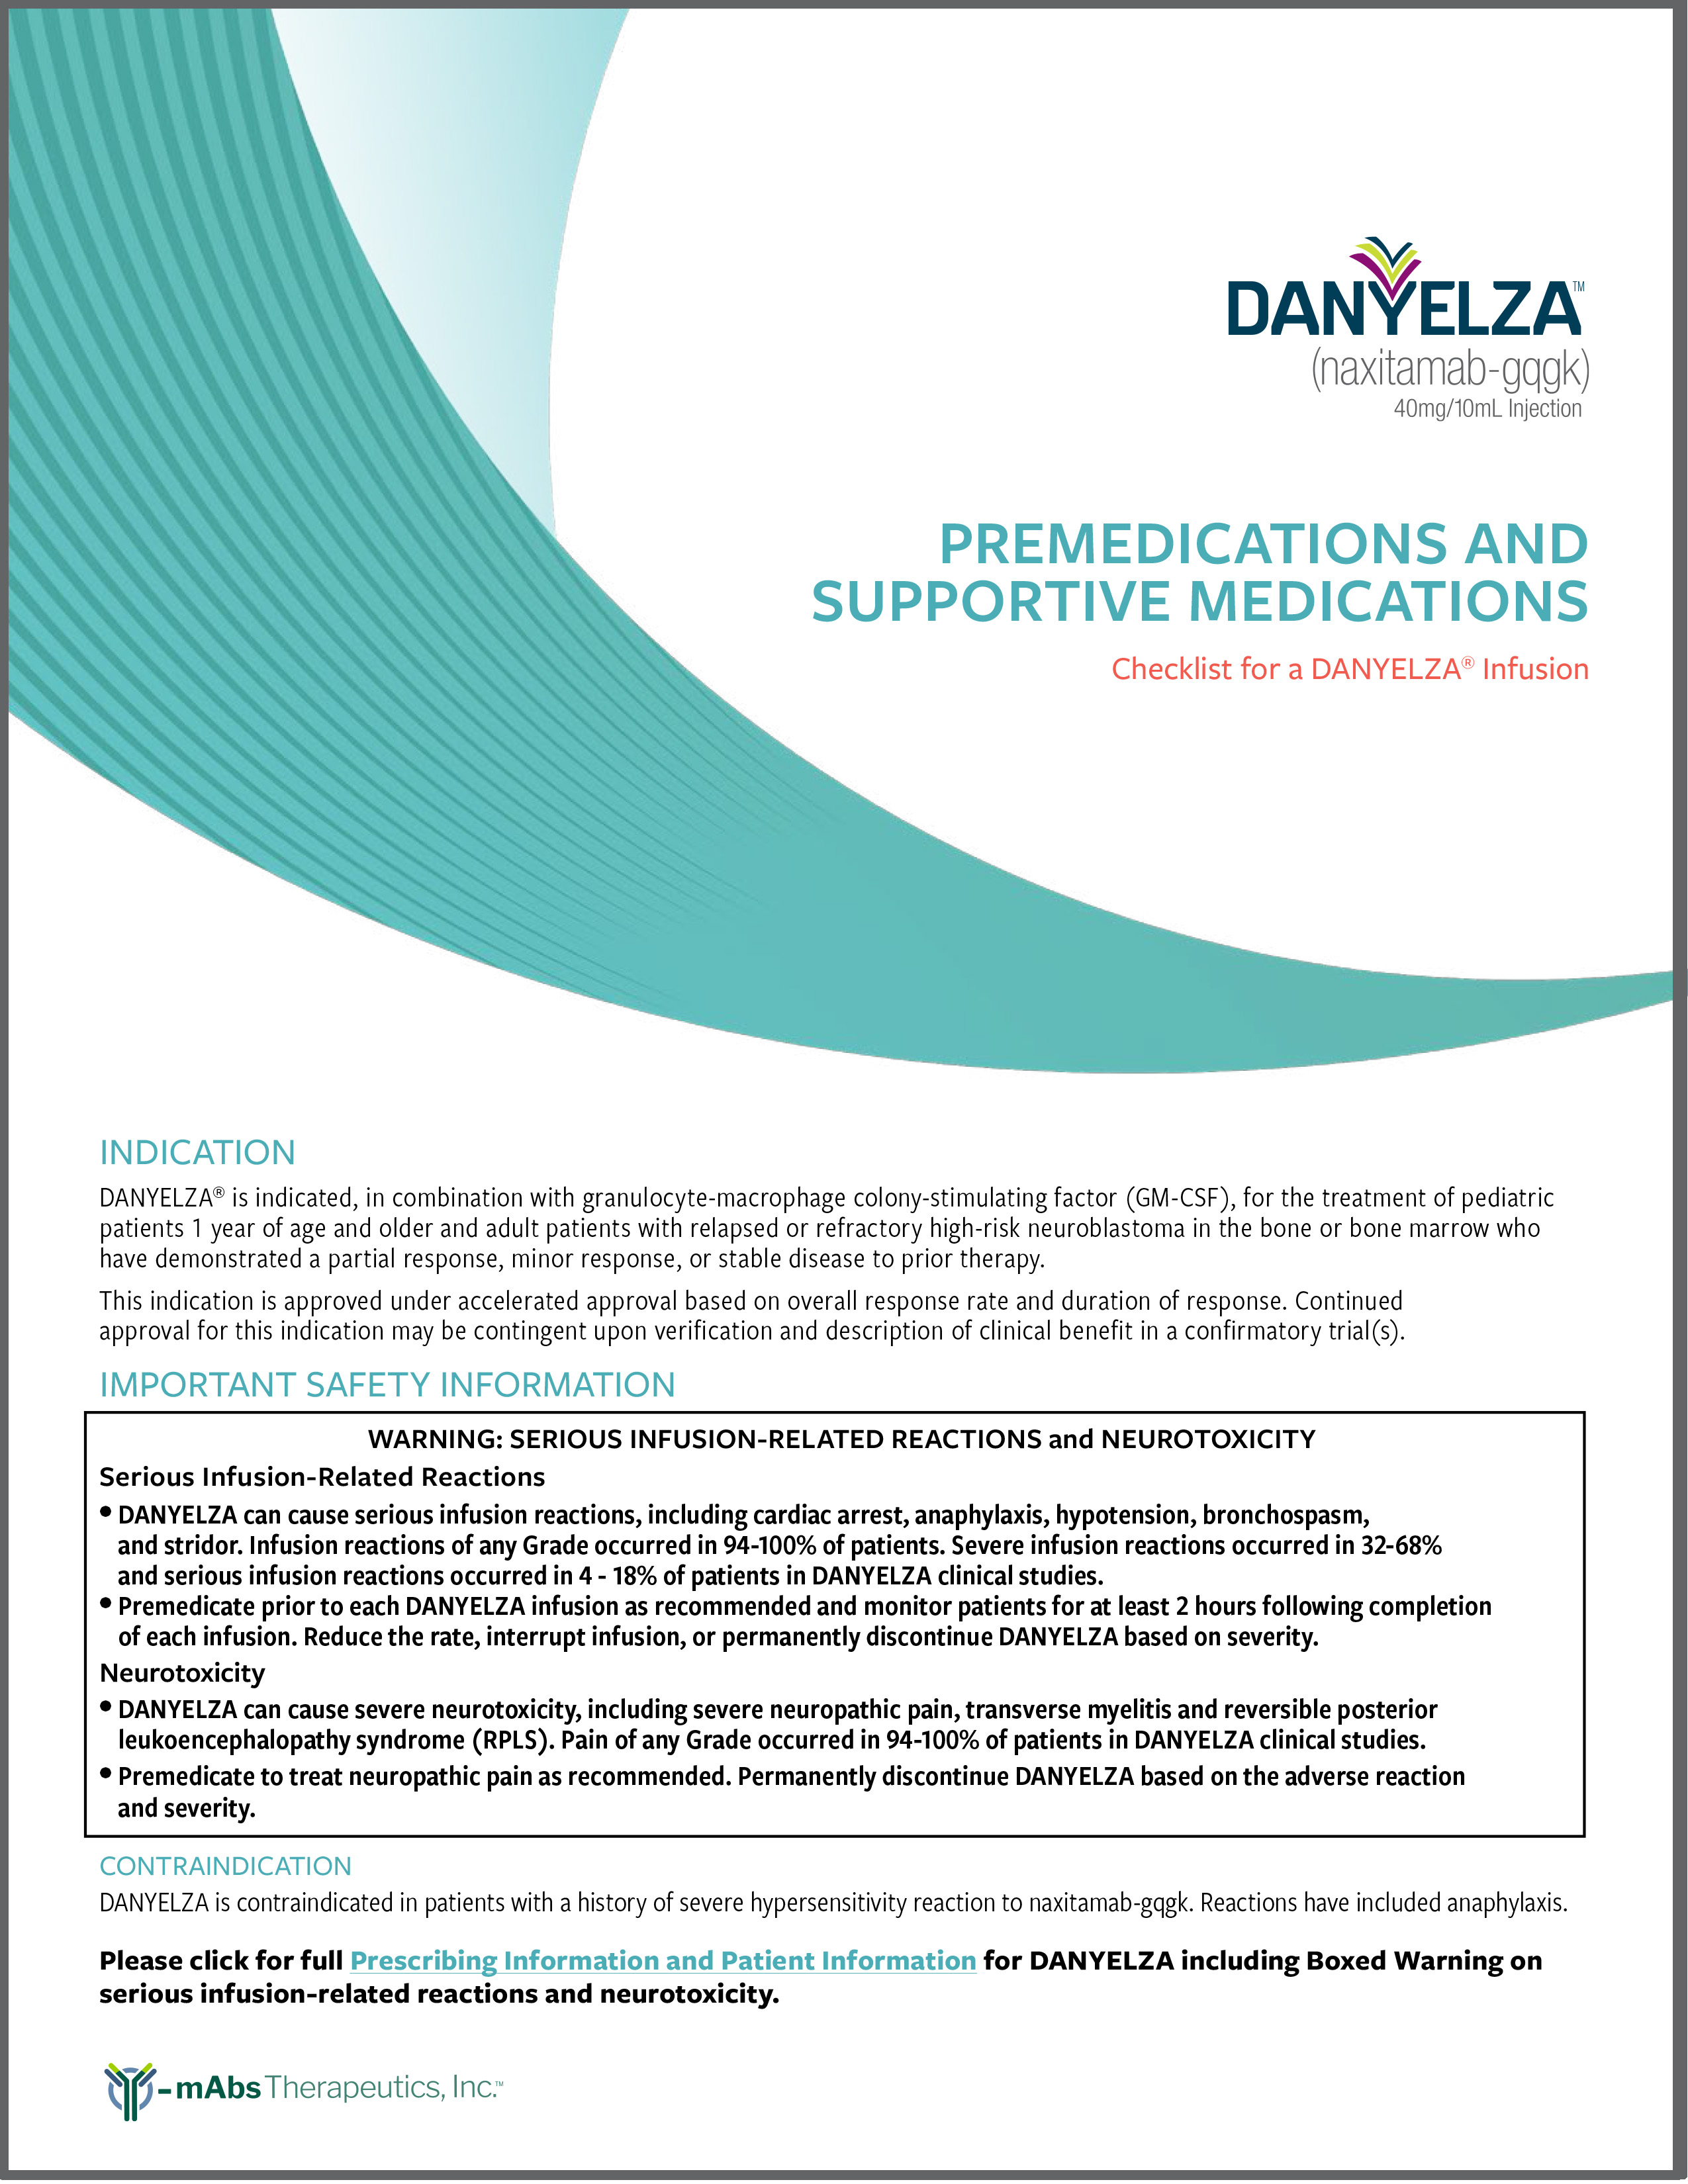 Download the DANYELZA PremedicaNons and SupporNve MedicaNons Checklist